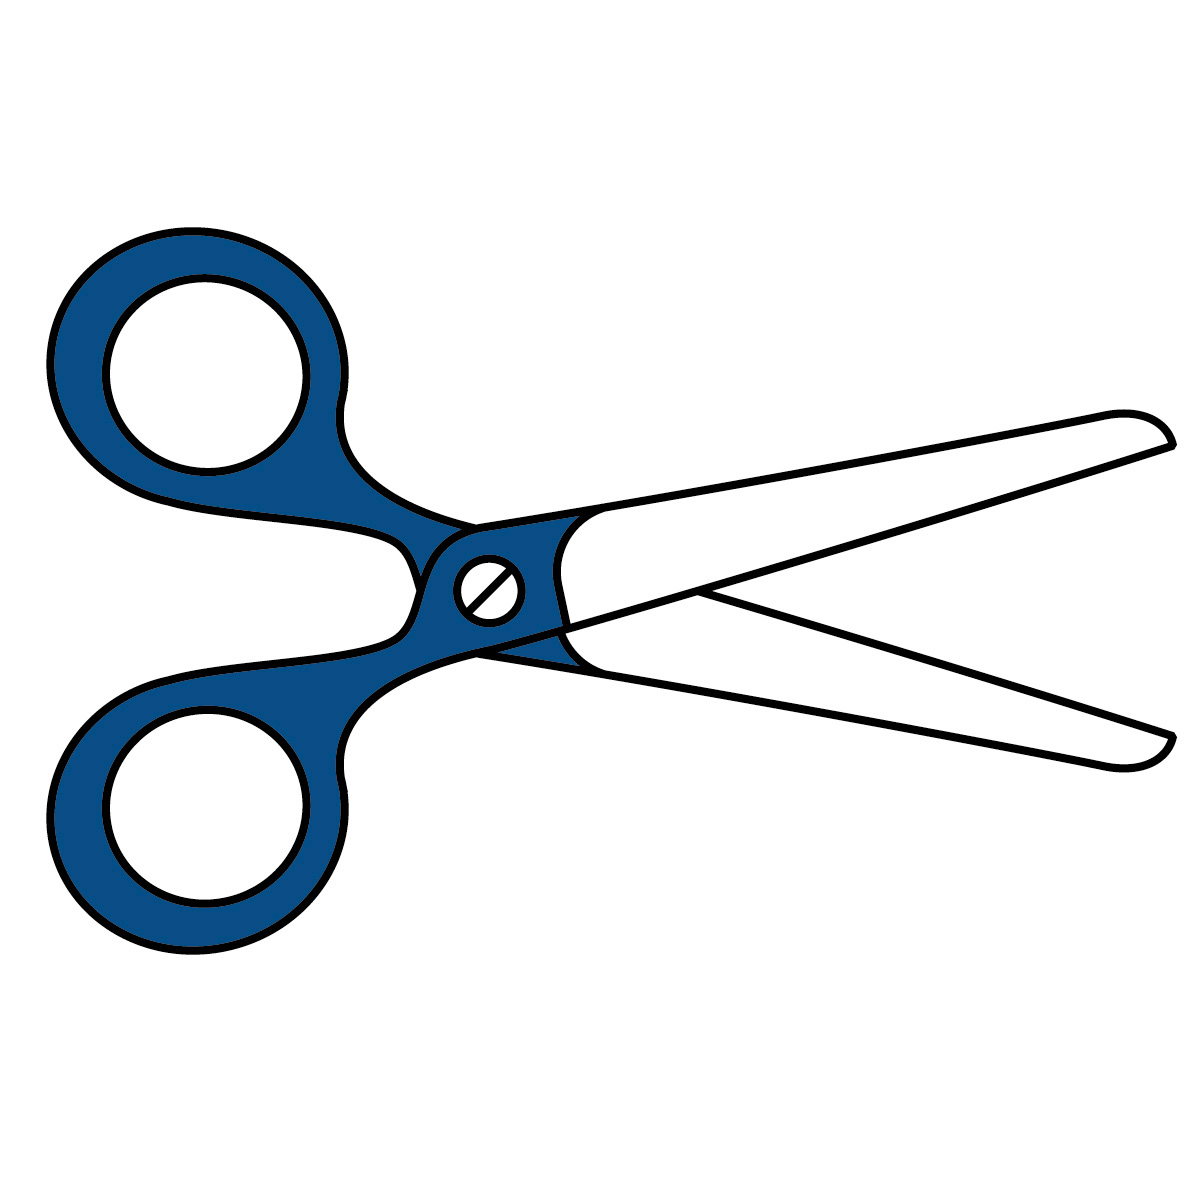 Scissors Line Drawing - ClipArt Best